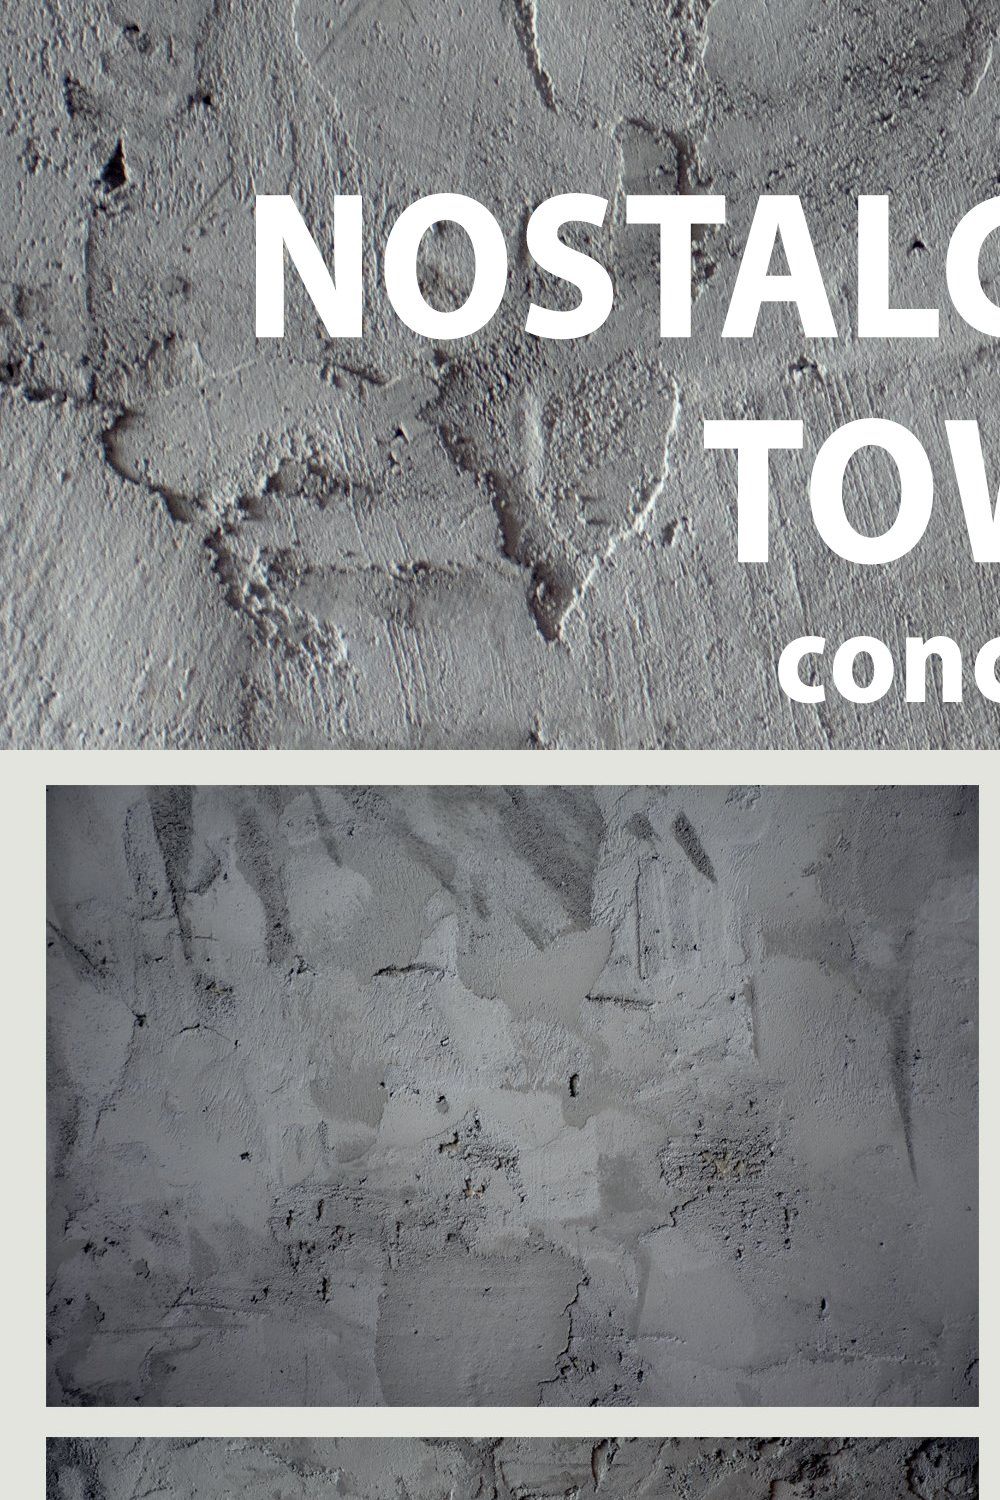 Nostalgic Town: Concrete pinterest preview image.